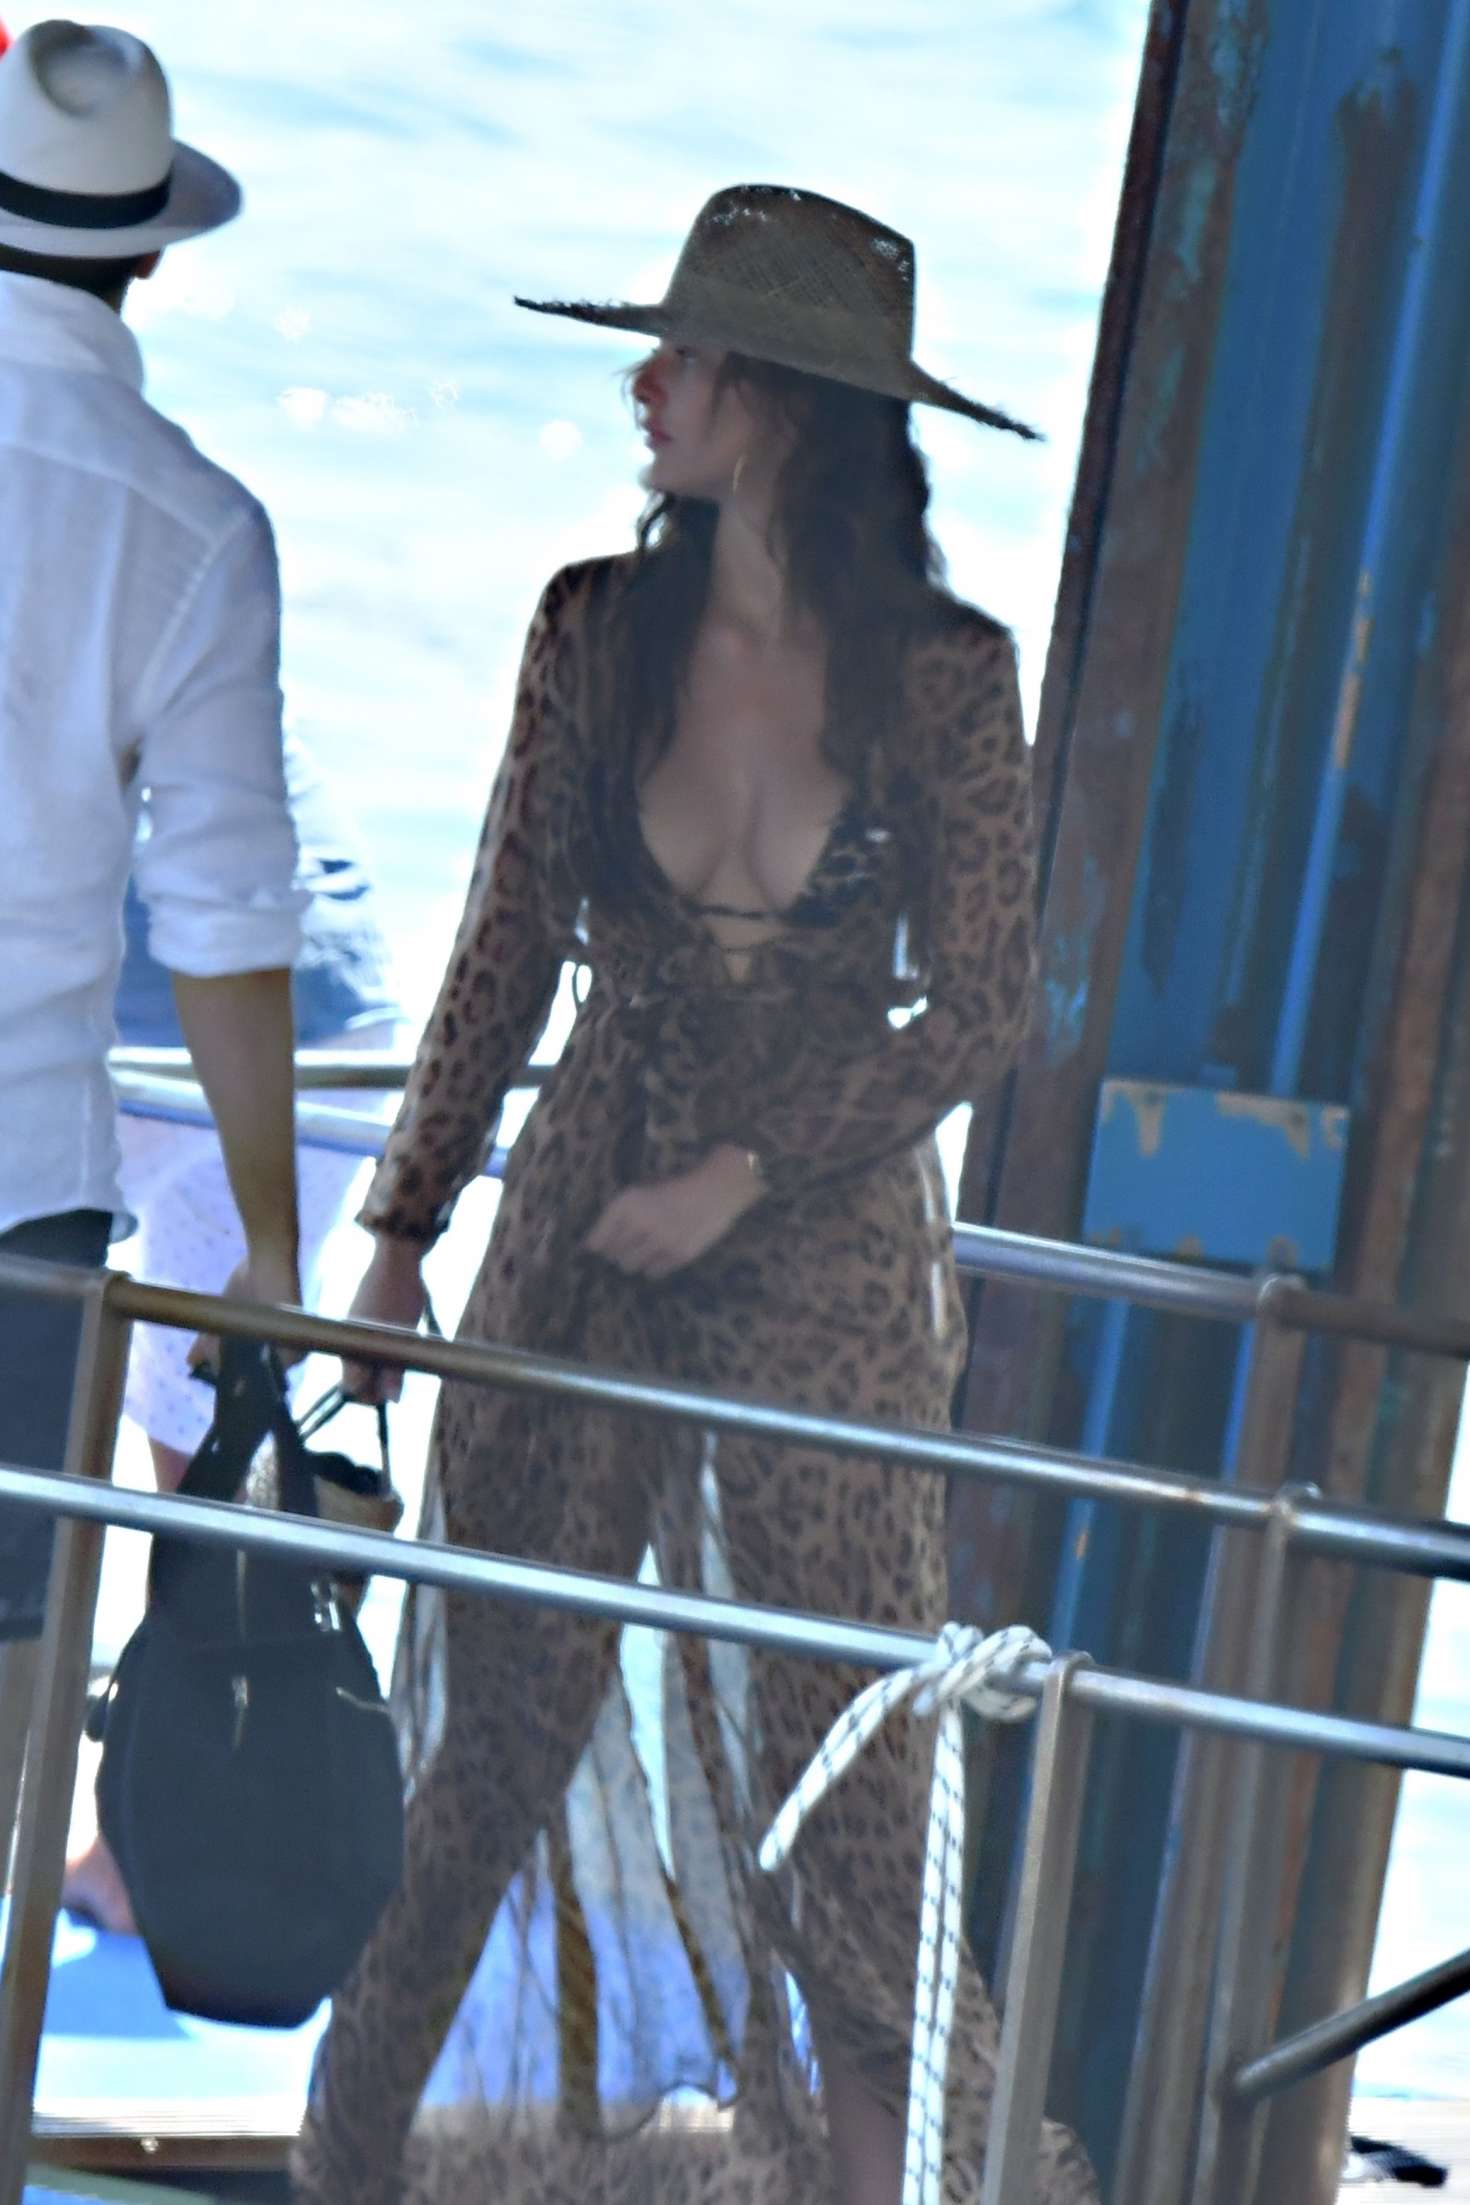 Camila Morrone and Leonardo DiCaprio on holiday in Positano